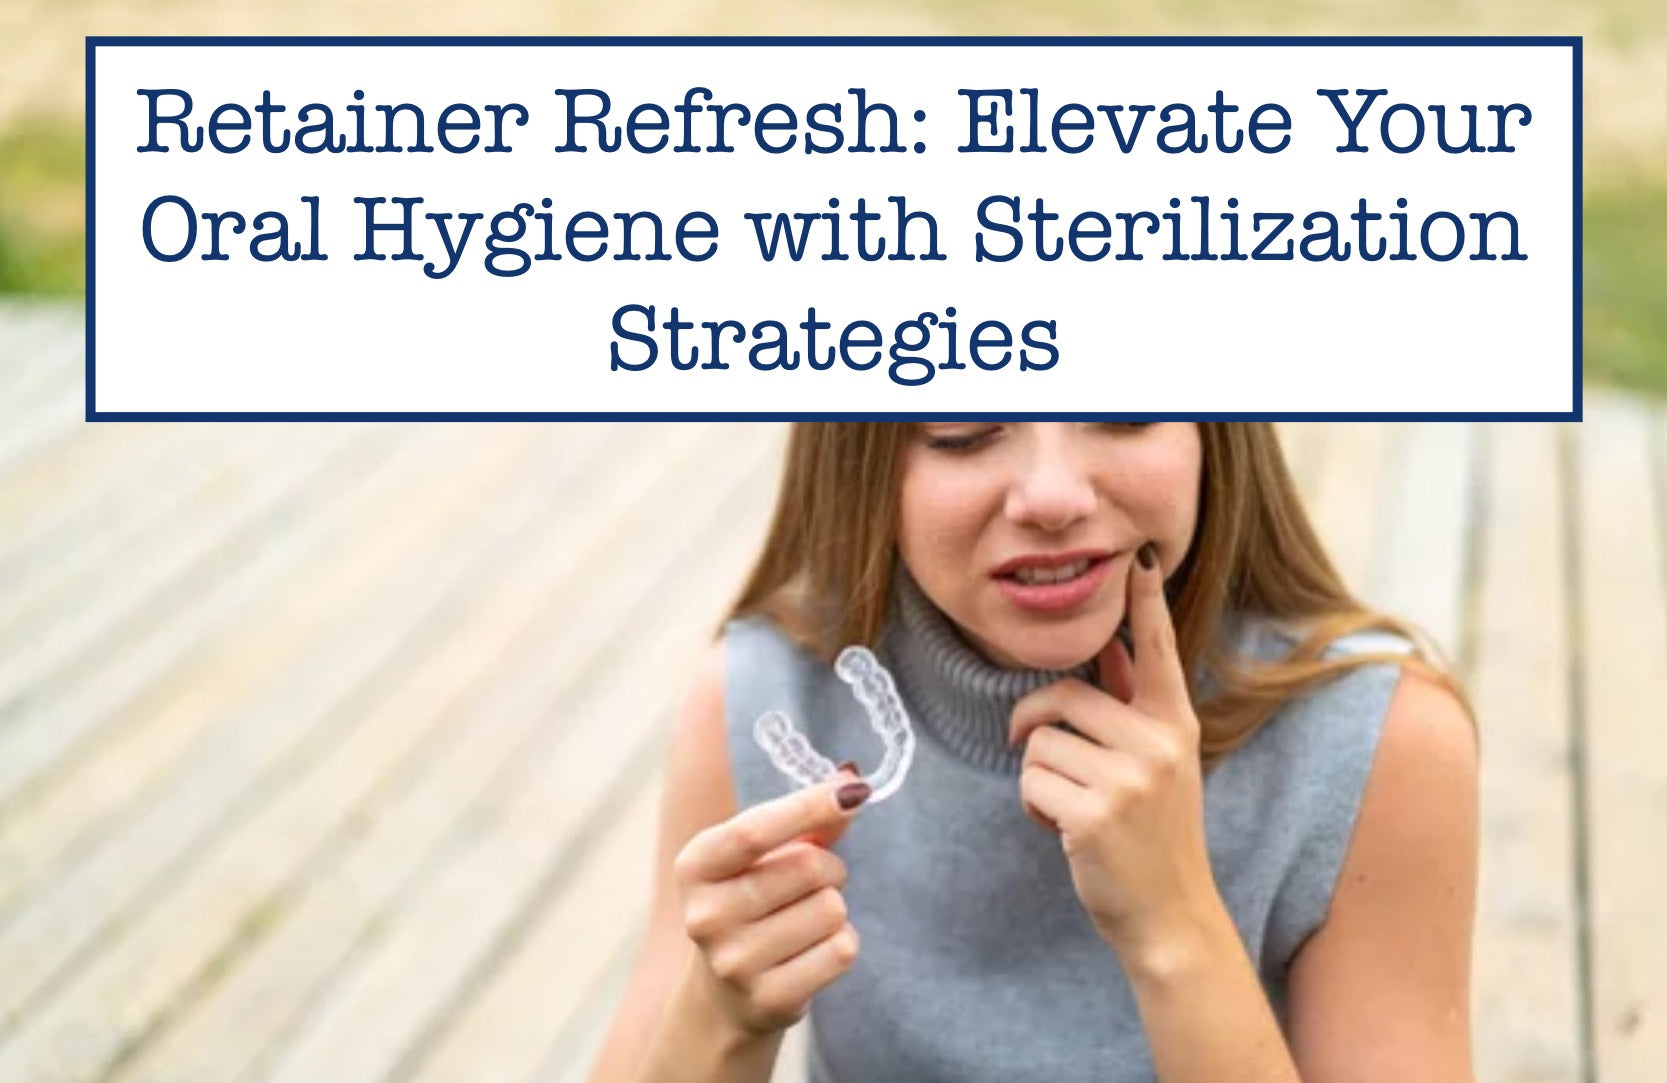 Retainer Refresh: Elevate Your Oral Hygiene with Sterilization Strategies